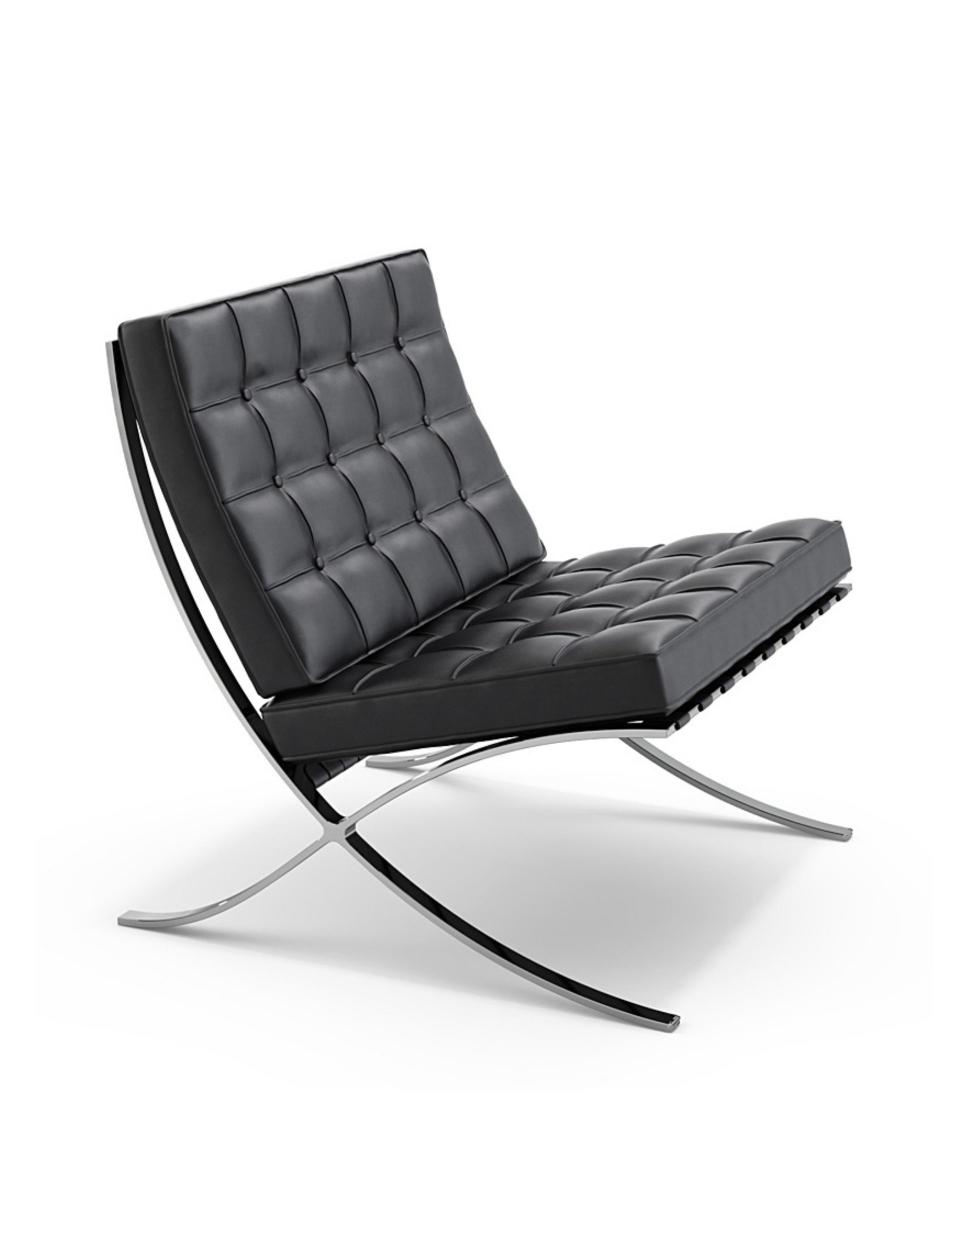 Le fauteuil « Barcelona », Ludwig Mies Van der Rohe